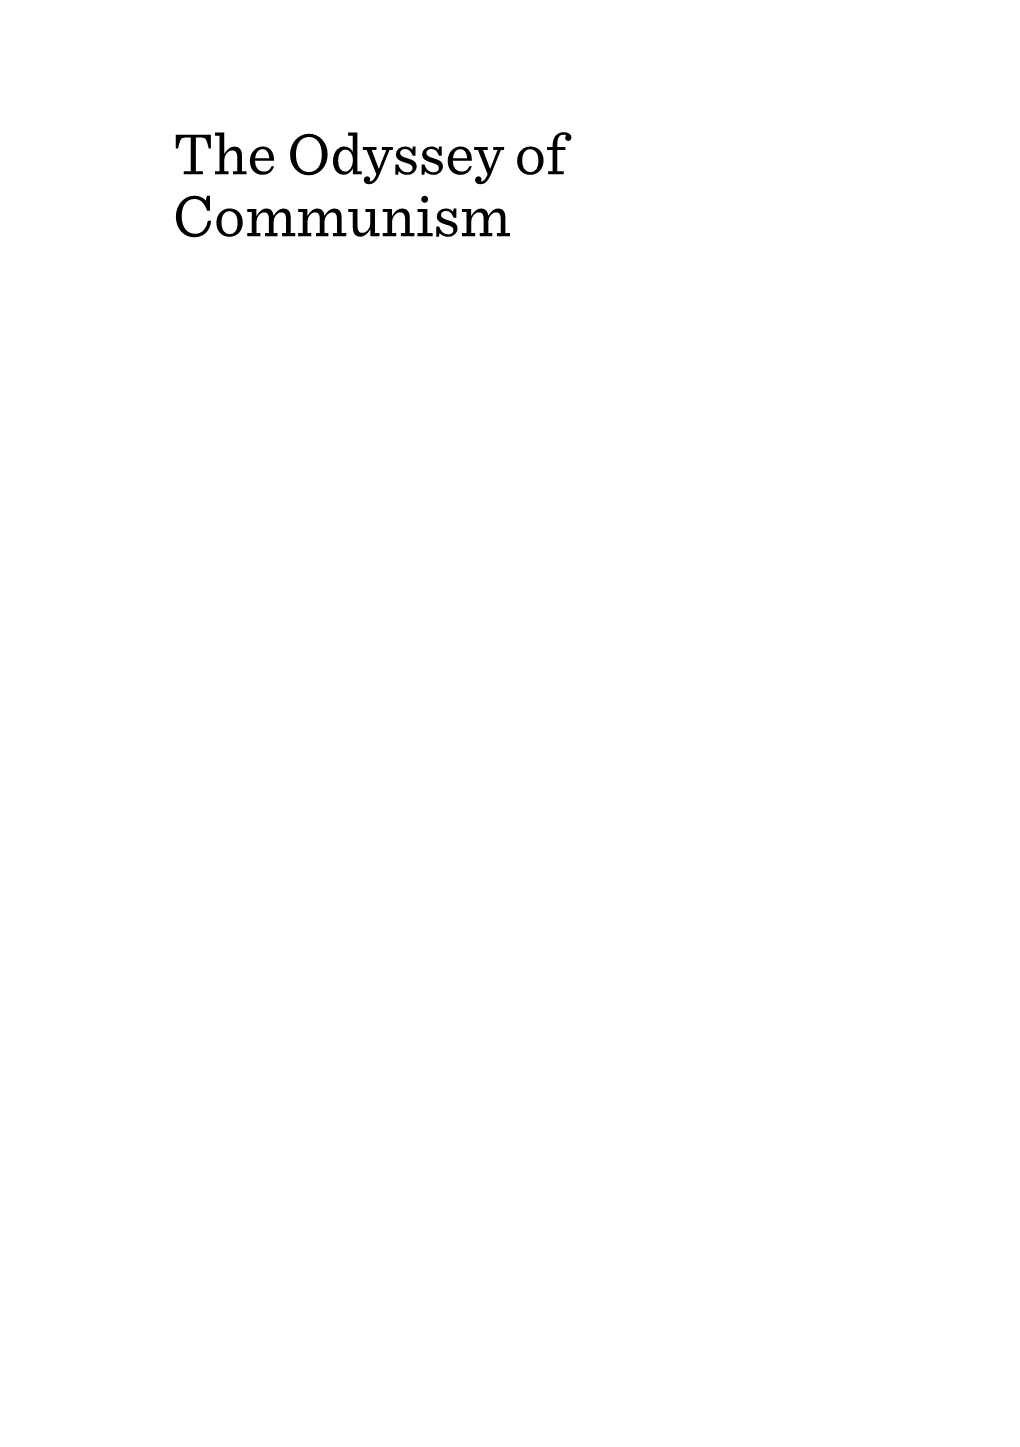 The Odyssey of Communism